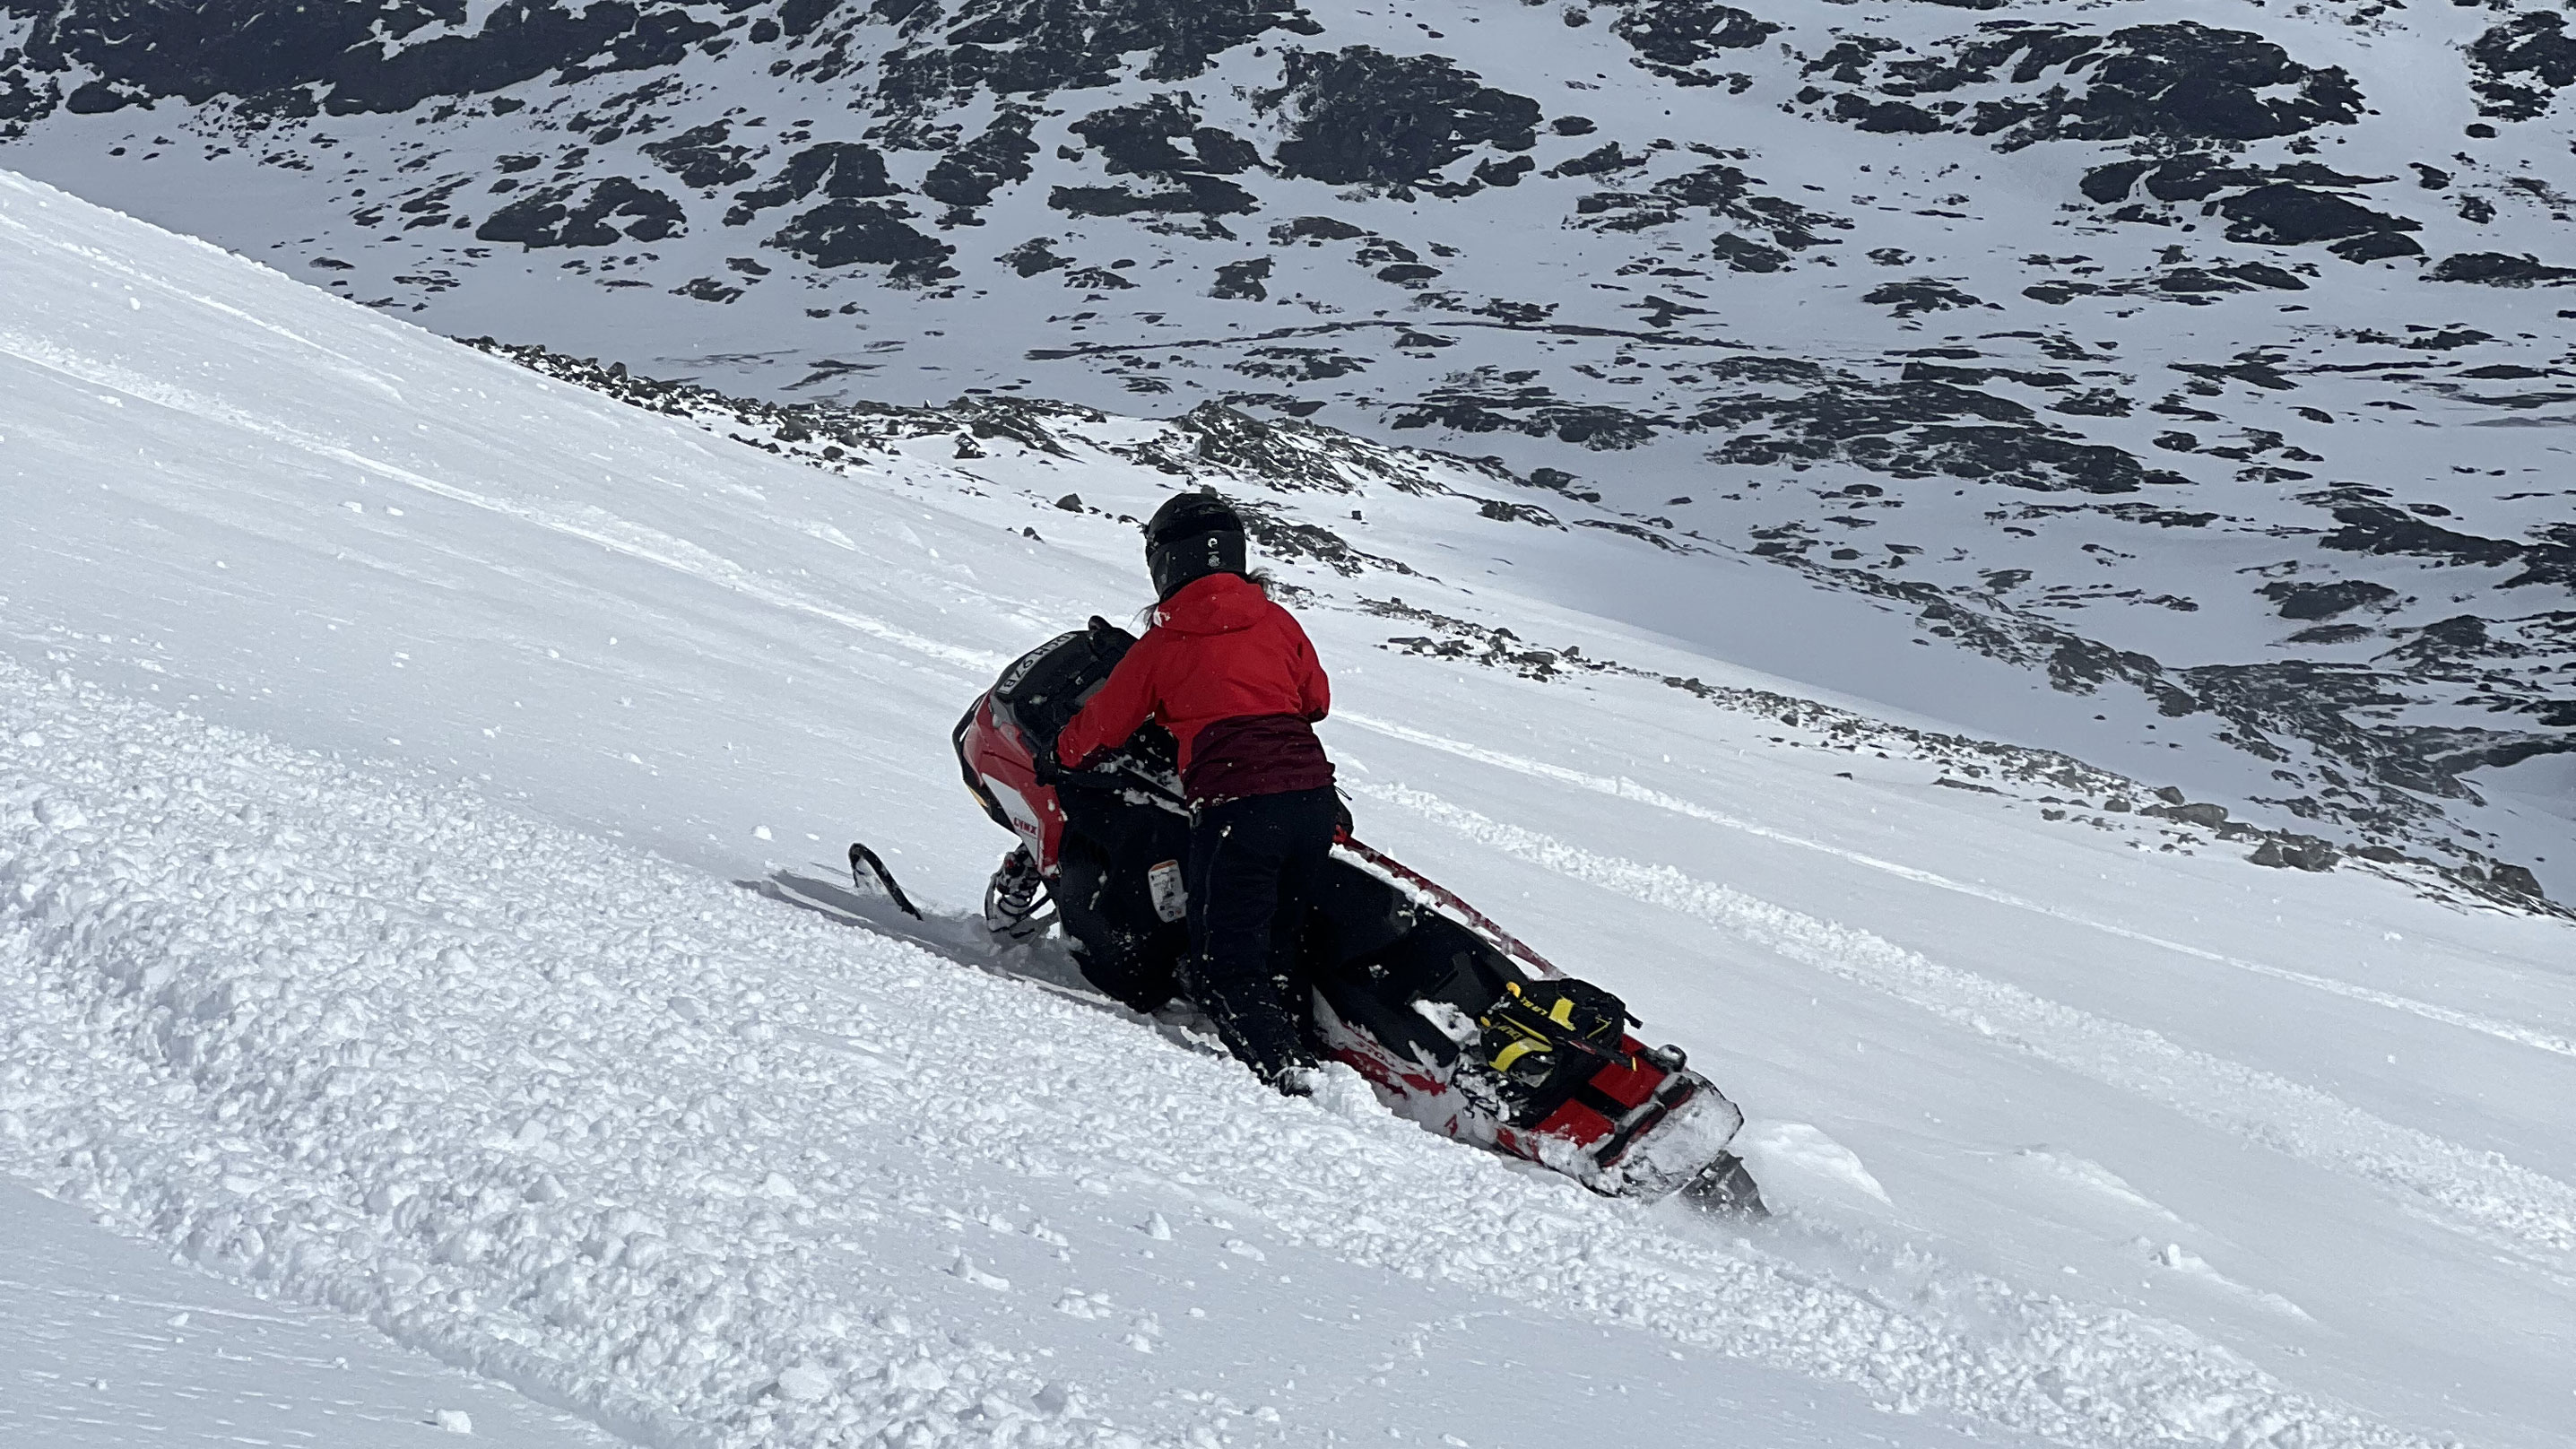 Mariell Kvickström riding a Lynx snowmobile in Riksgränsen